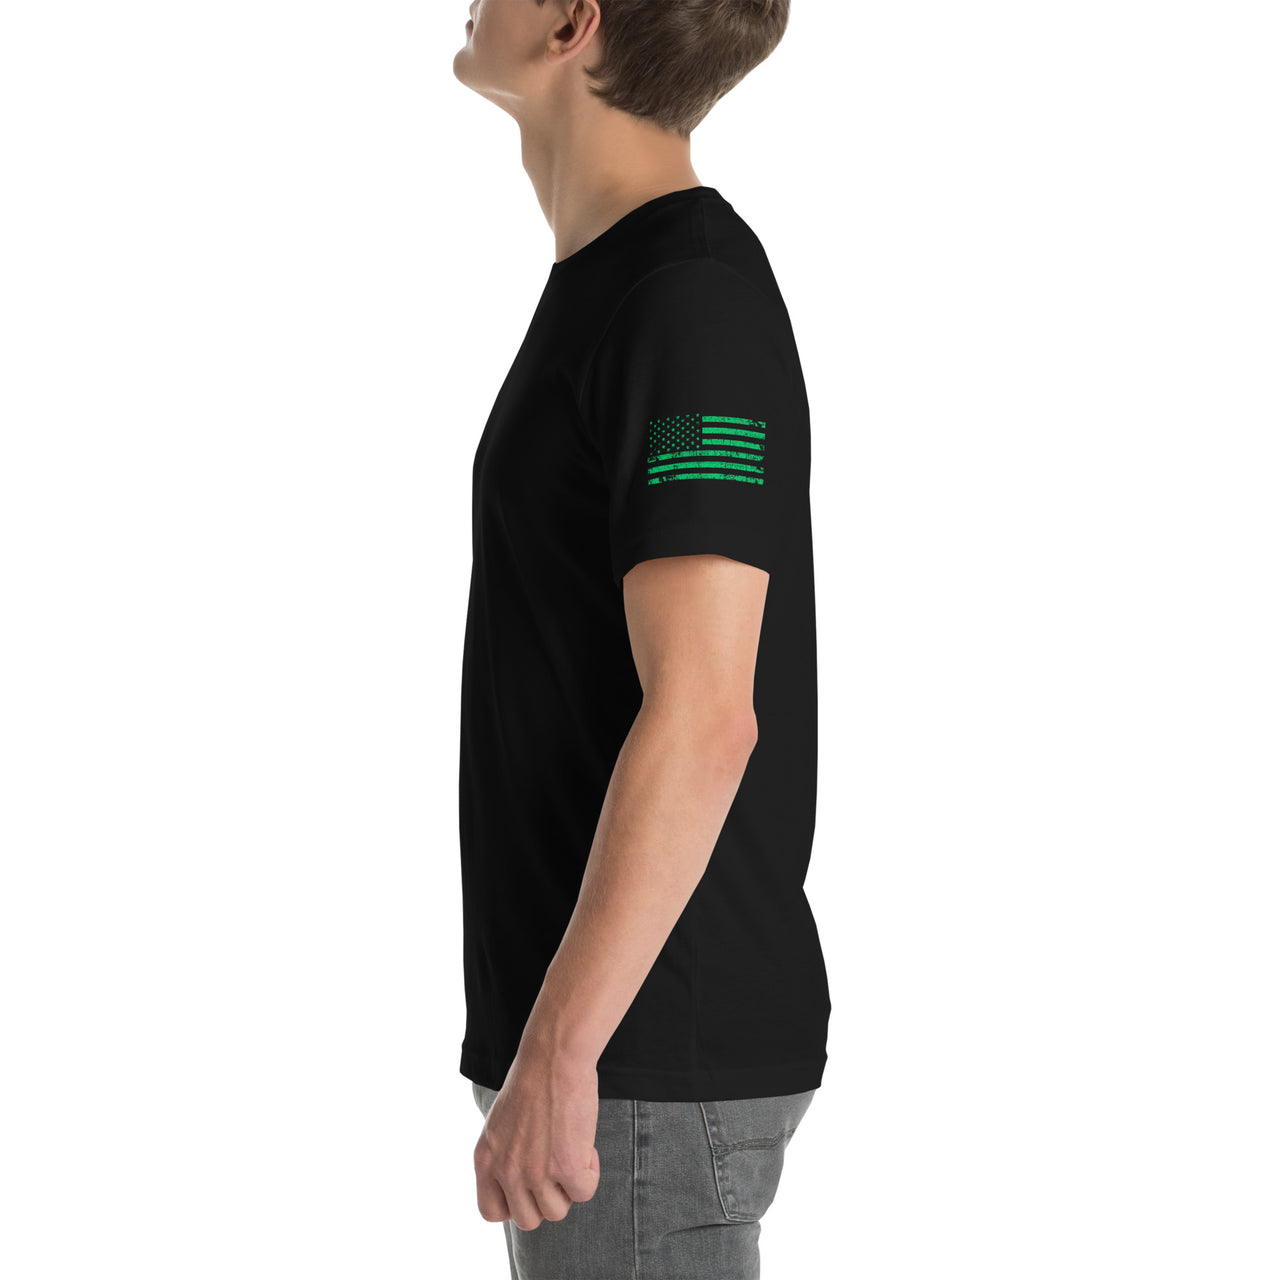 Irish American Flag T-Shirt modeled in black side view